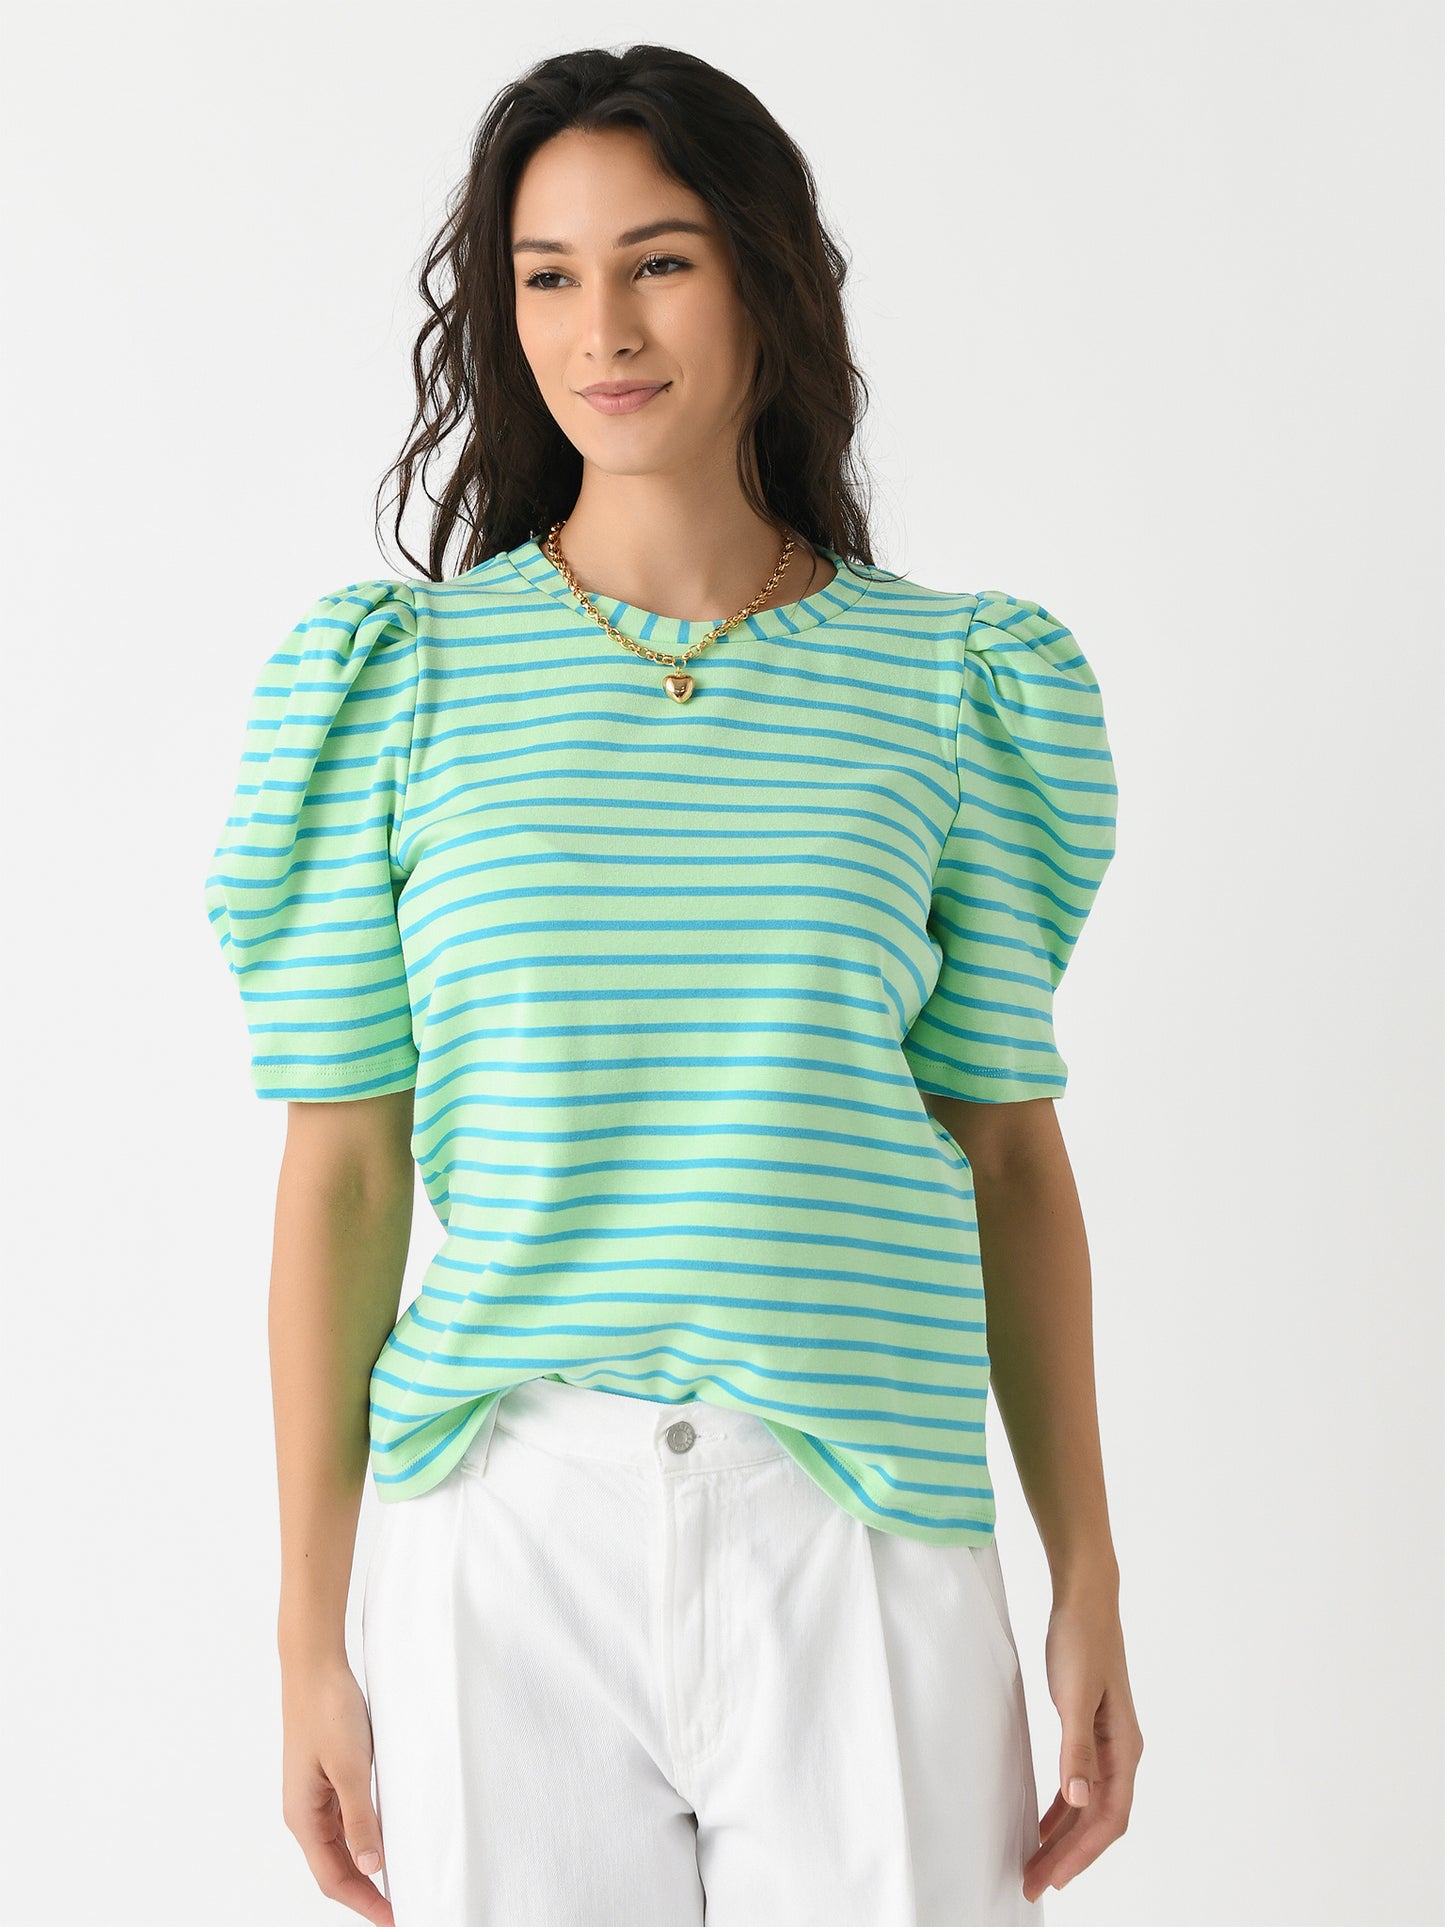 English Factory Women's Stripe Knit Shirt